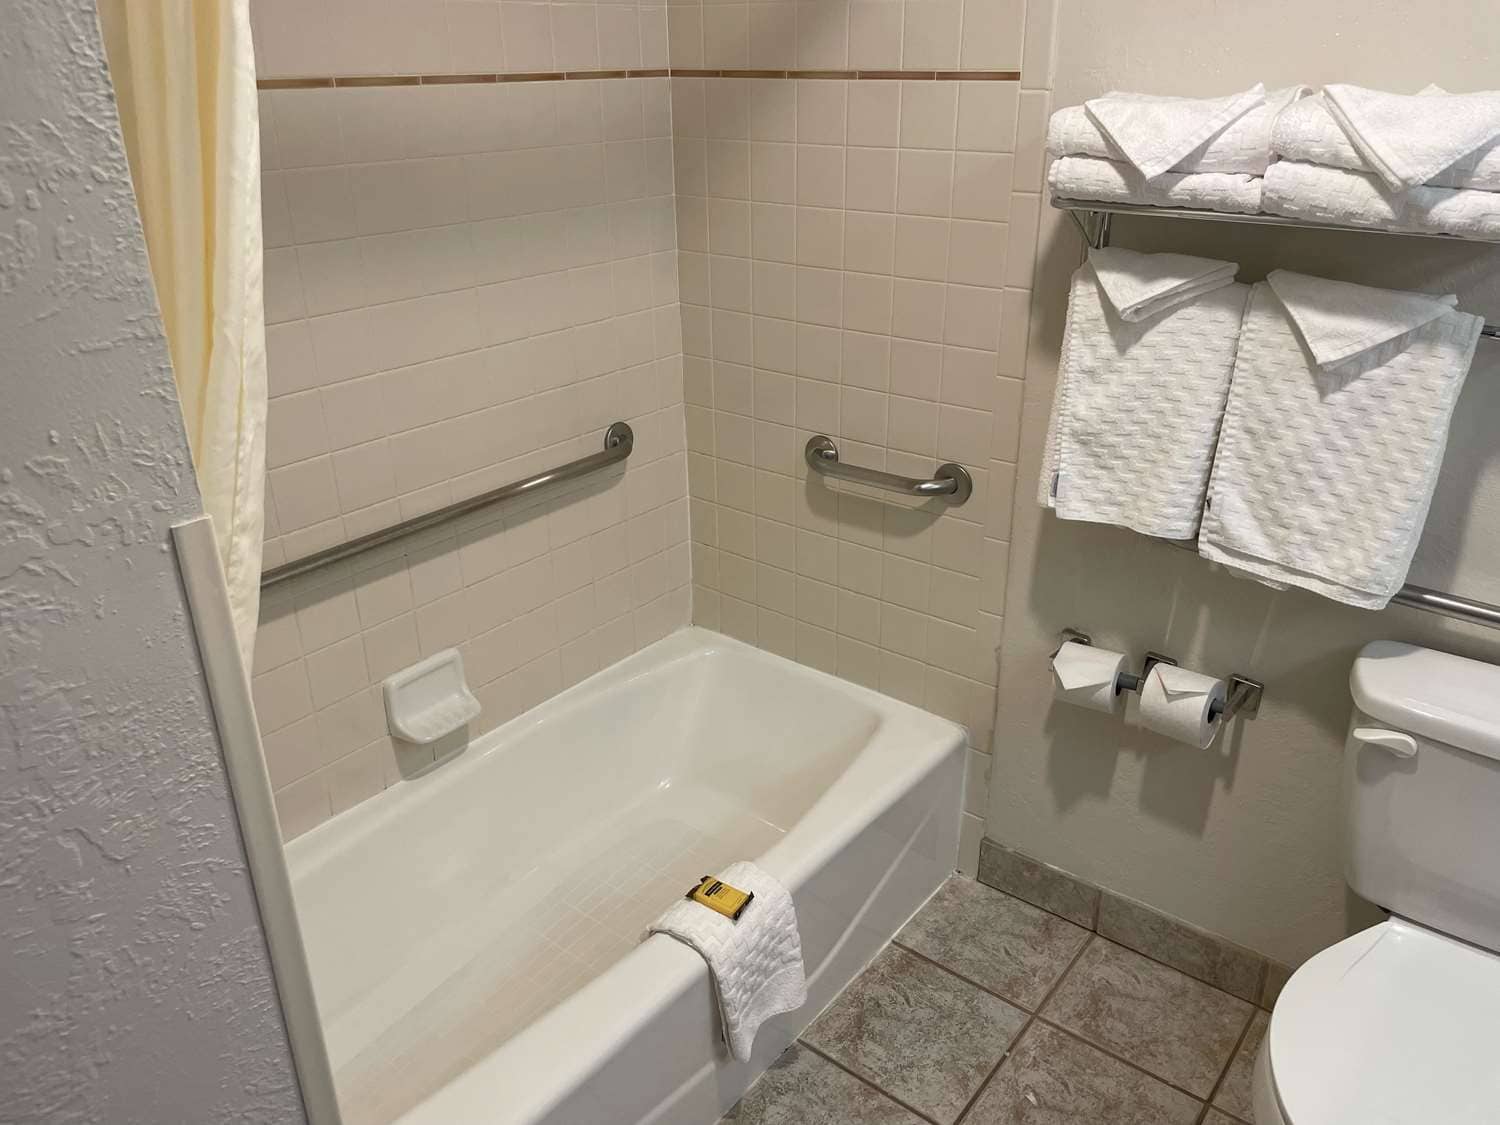 Las Vegas Raiders Shower Curtain, Raiders Football Fans Bathroom Decor